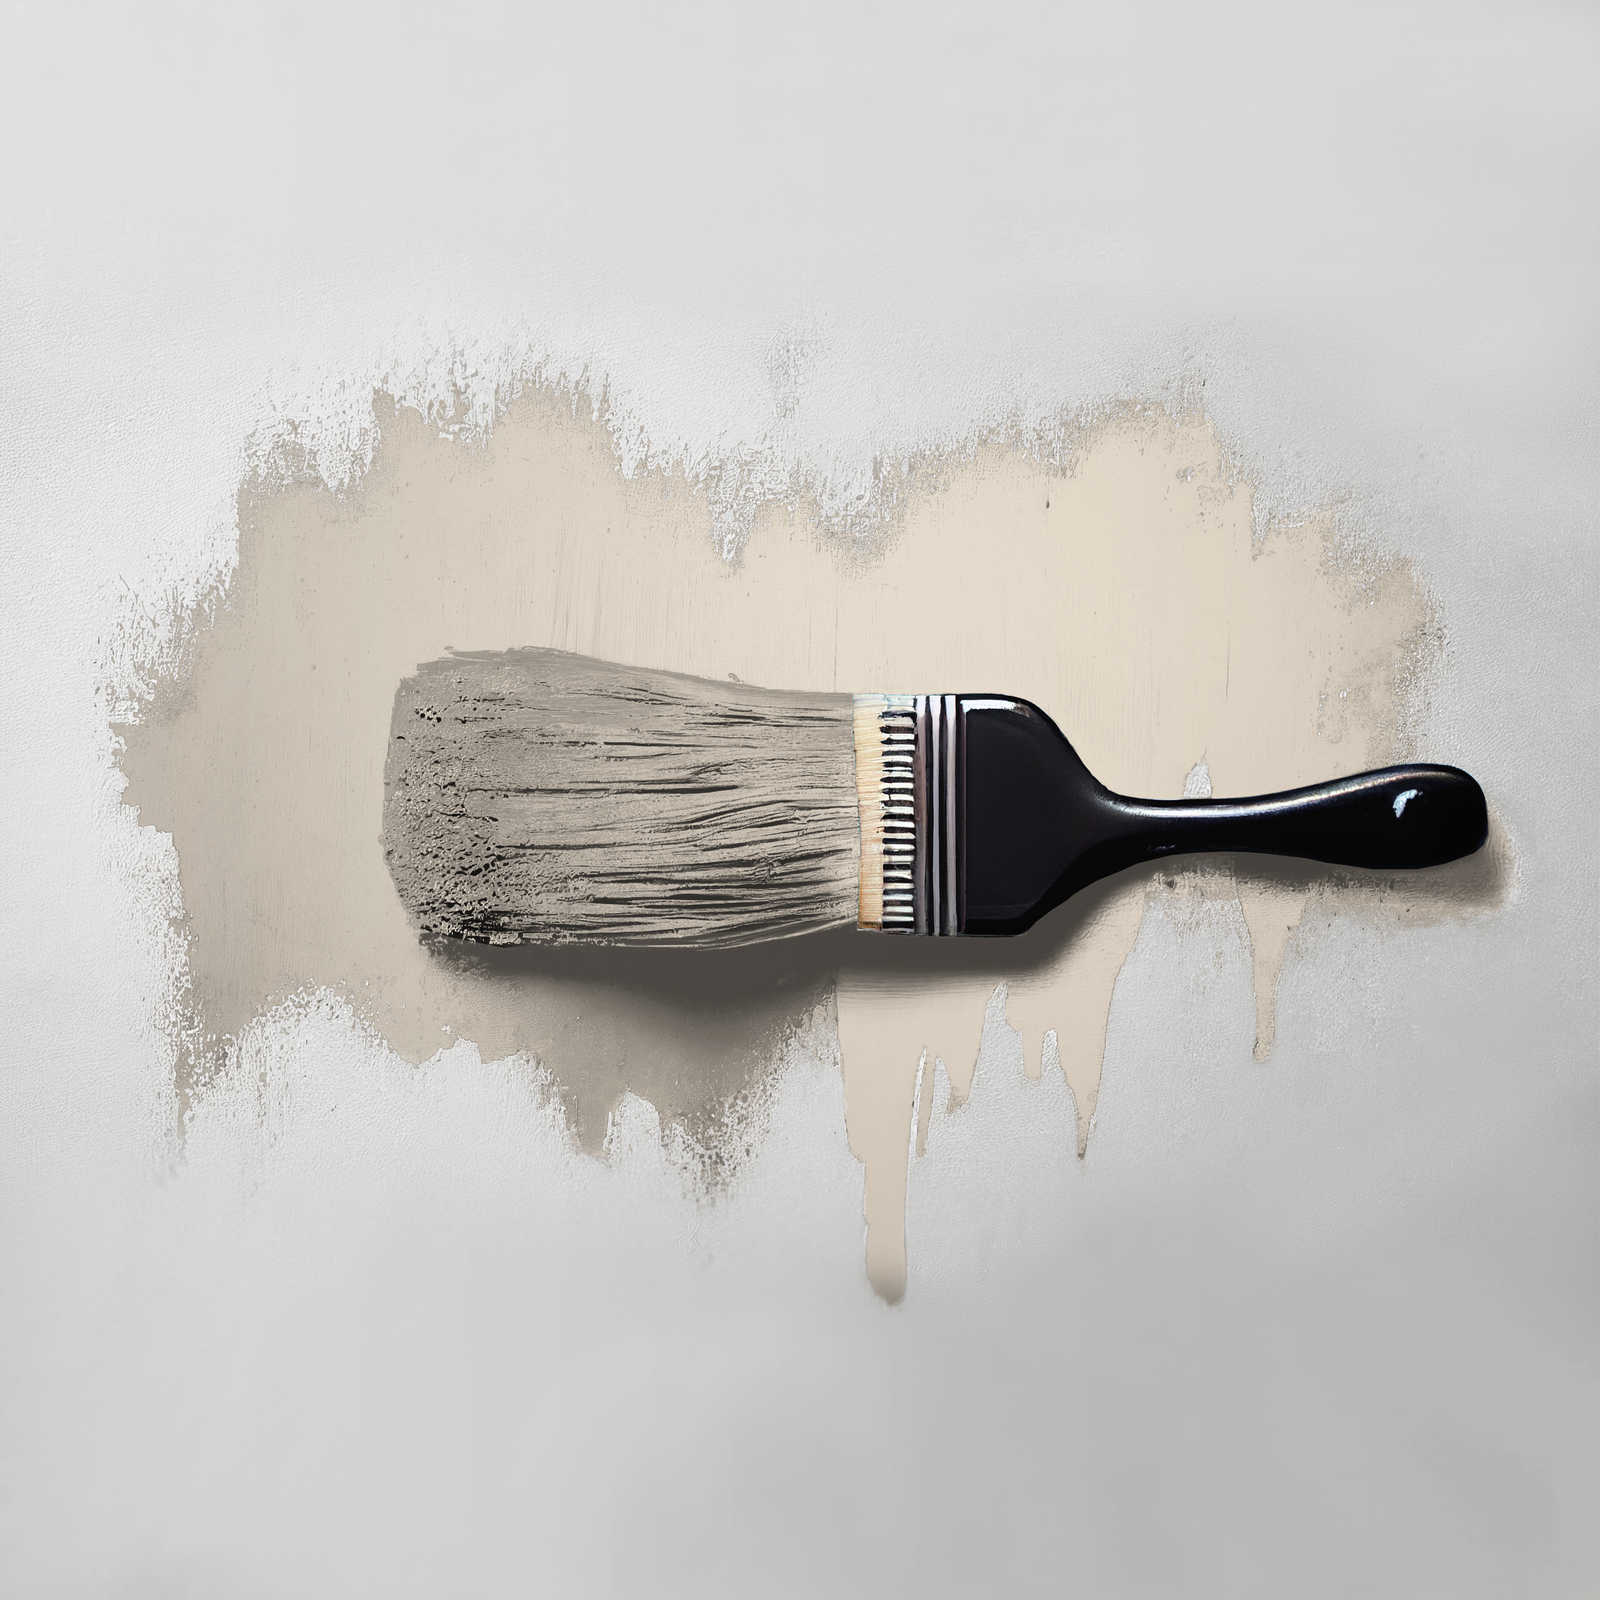             Pittura murale TCK6000 »Sweet Sesame« in beige senza tempo – 5,0 litri
        